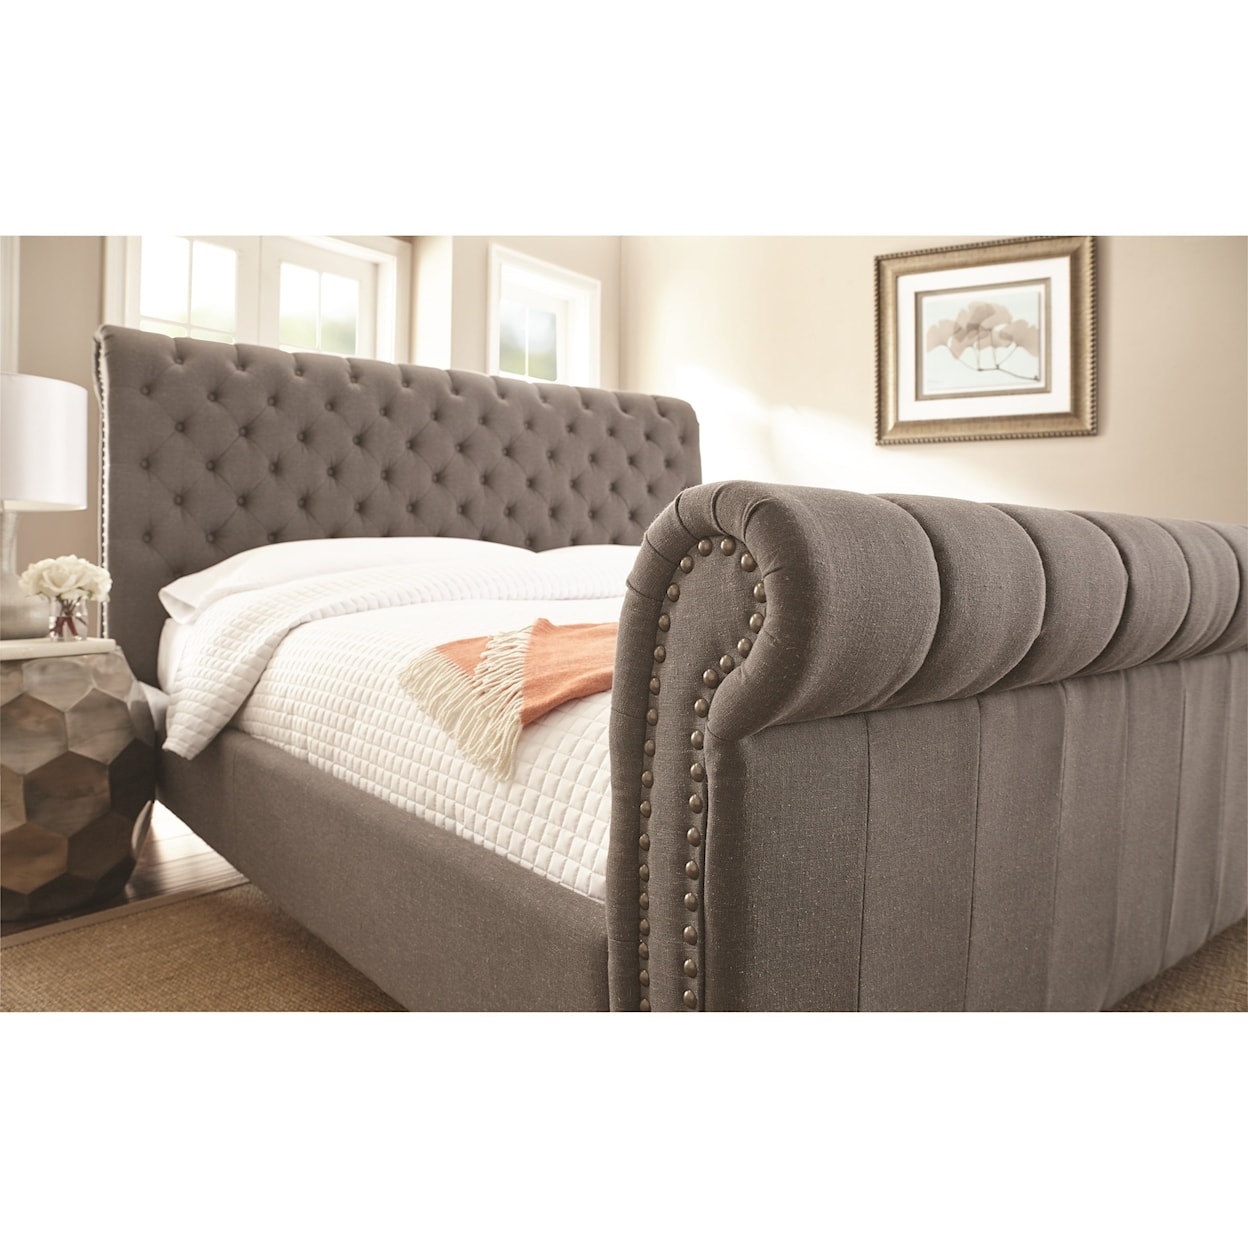 Belfort Essentials Swanson 529544770 Queen Upholstered Sleigh Bed with ...